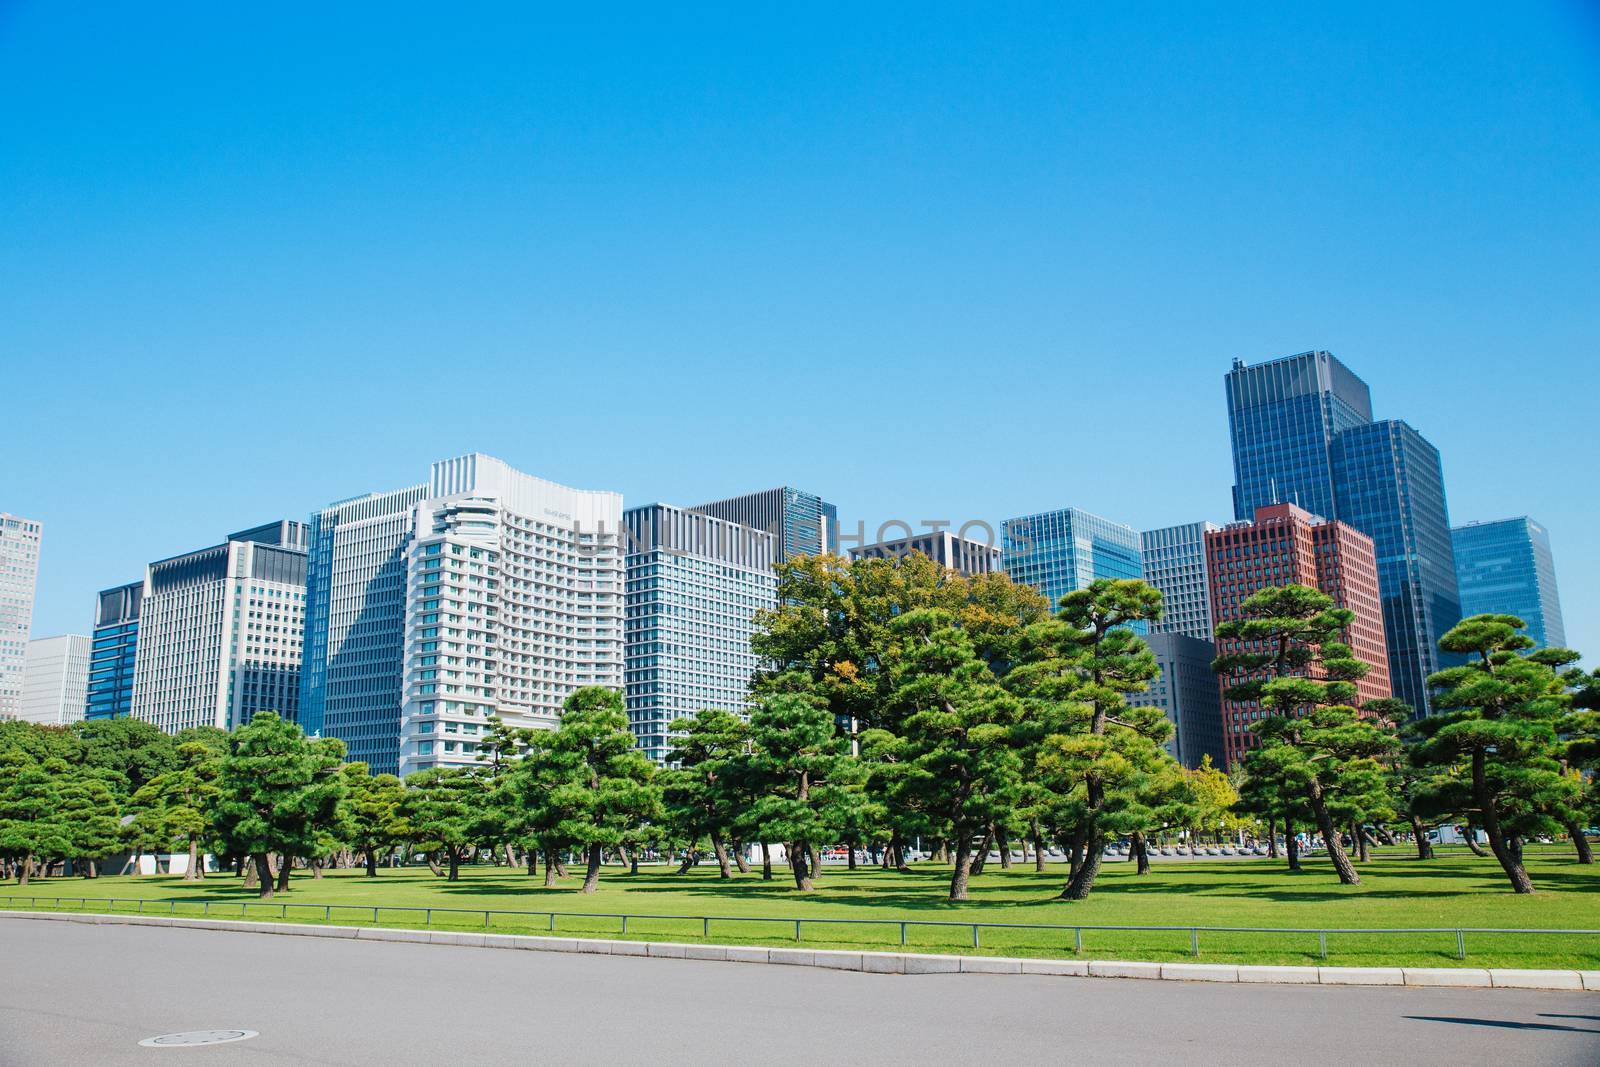 Japan city Tokyo modern building under blue sky